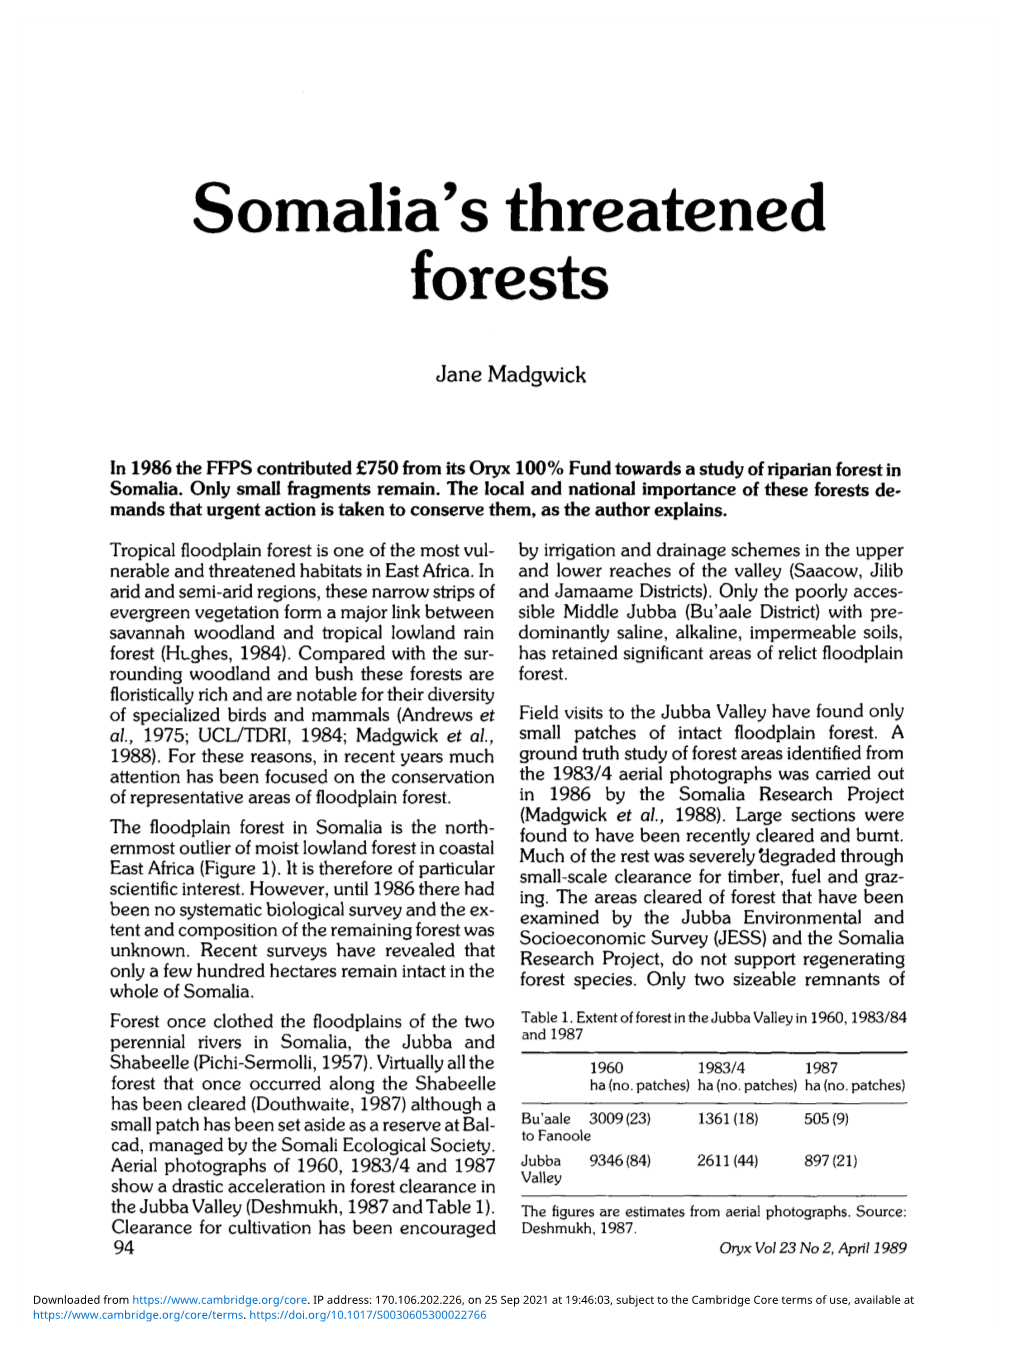 Somalia's Threatened Forests